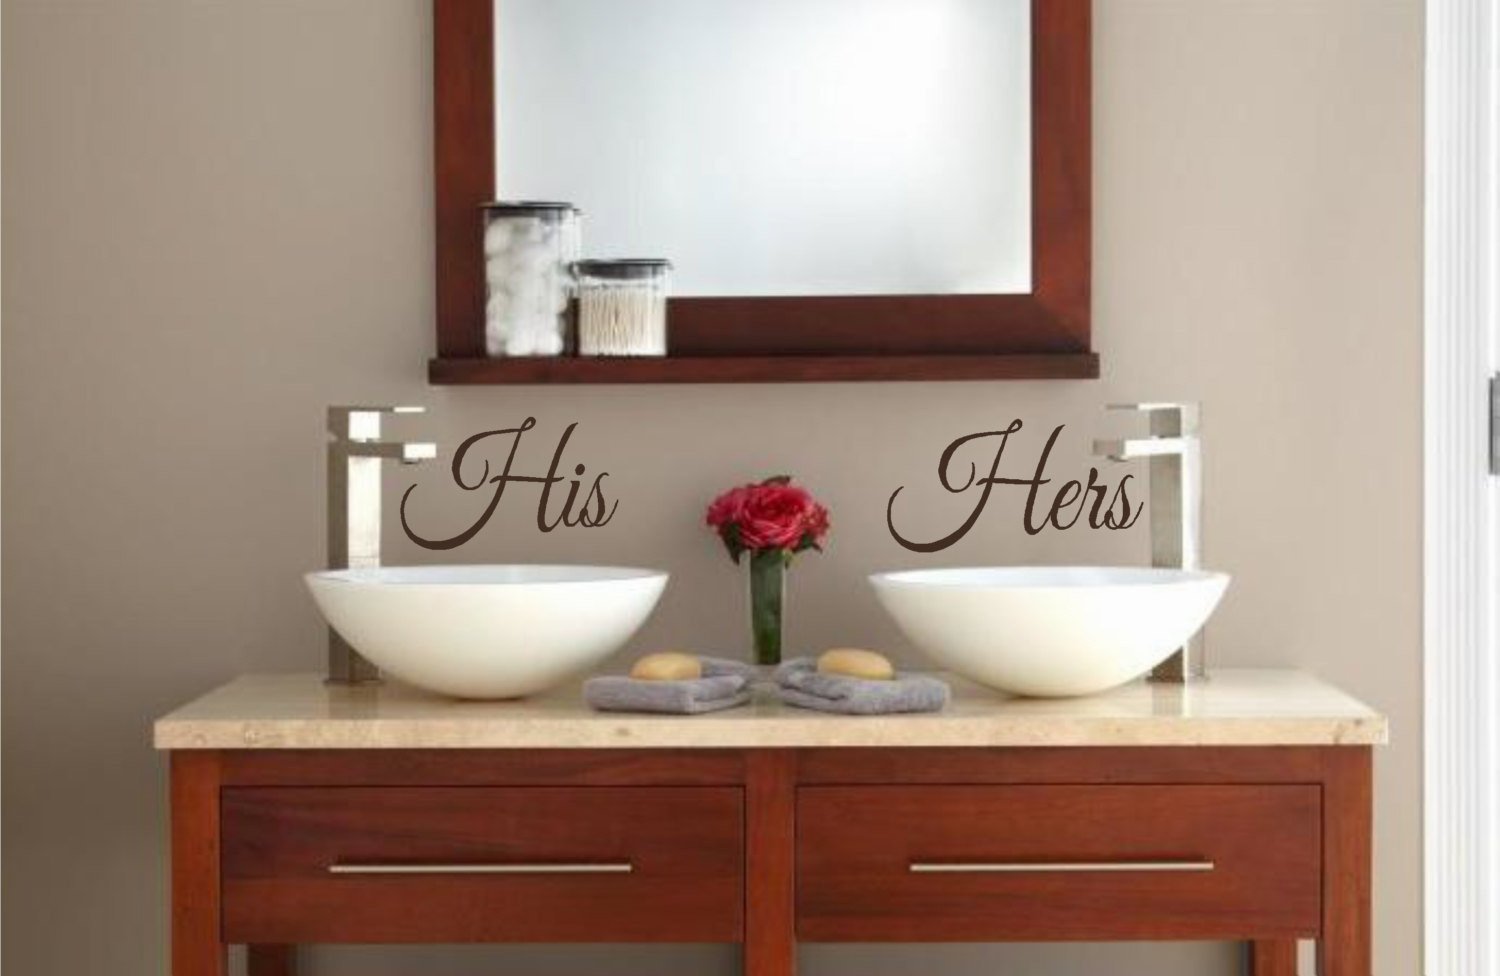 His and Her Bathroom Decor Luxury His Hers Vinyl Wall Decal Bathroom Bedroom Wedding Decor